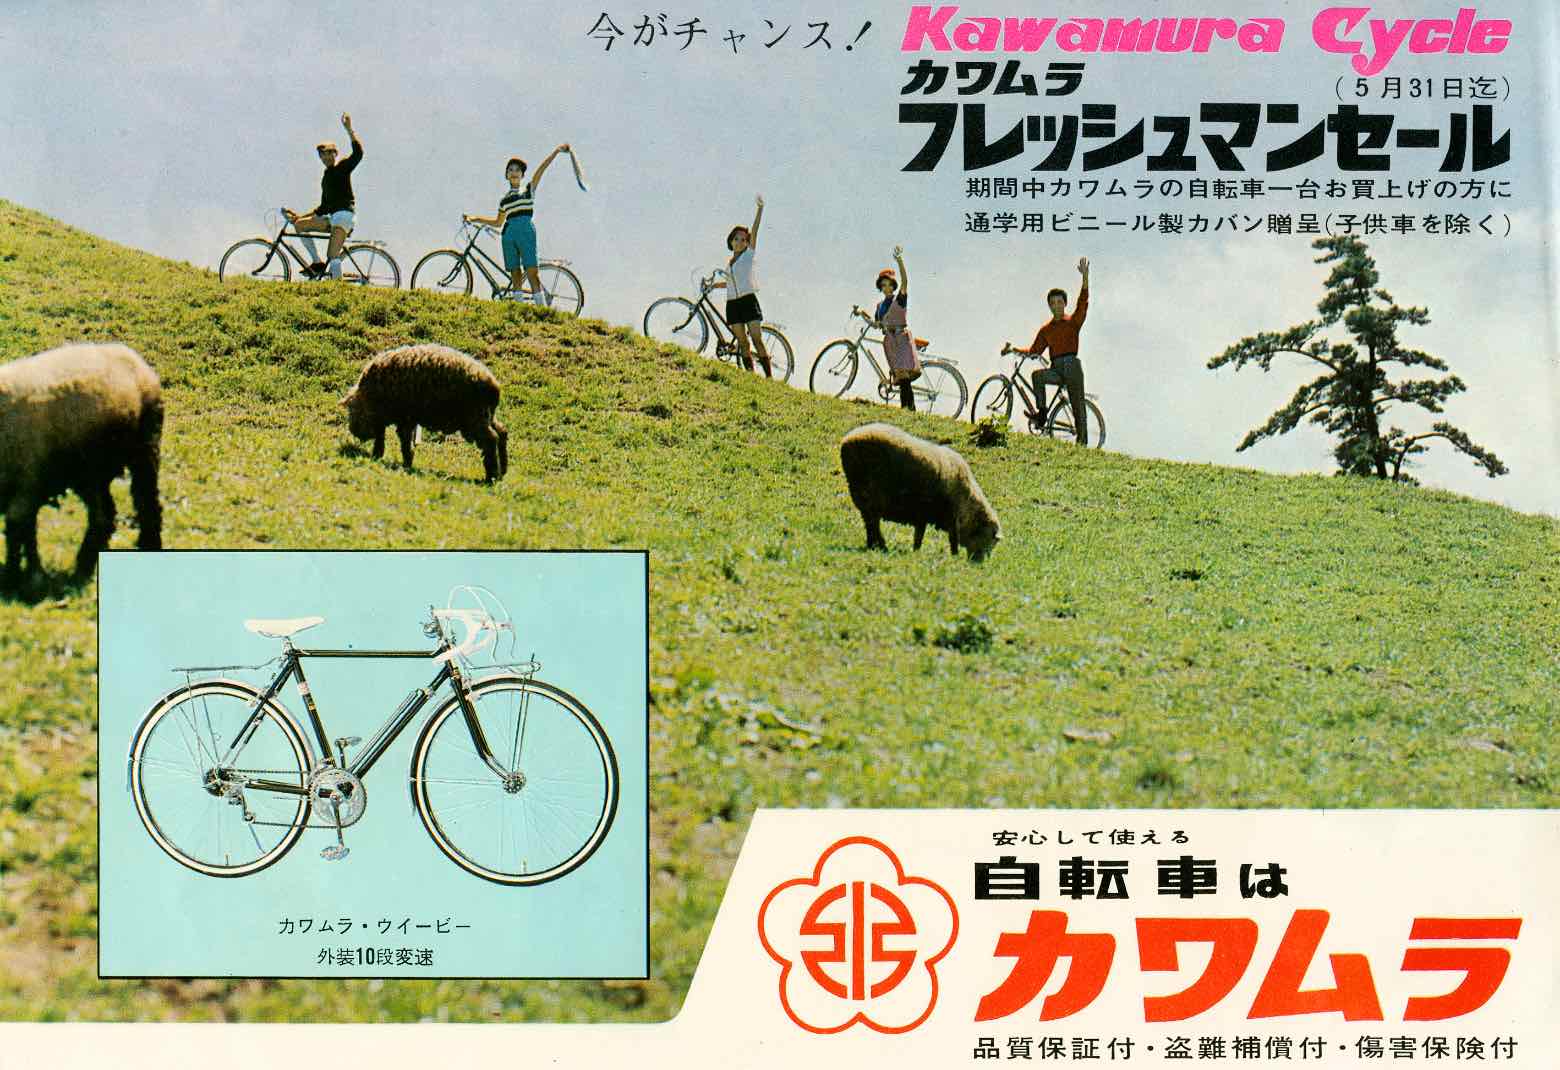 Kawamura - catalogue 1965? scan 1 main image